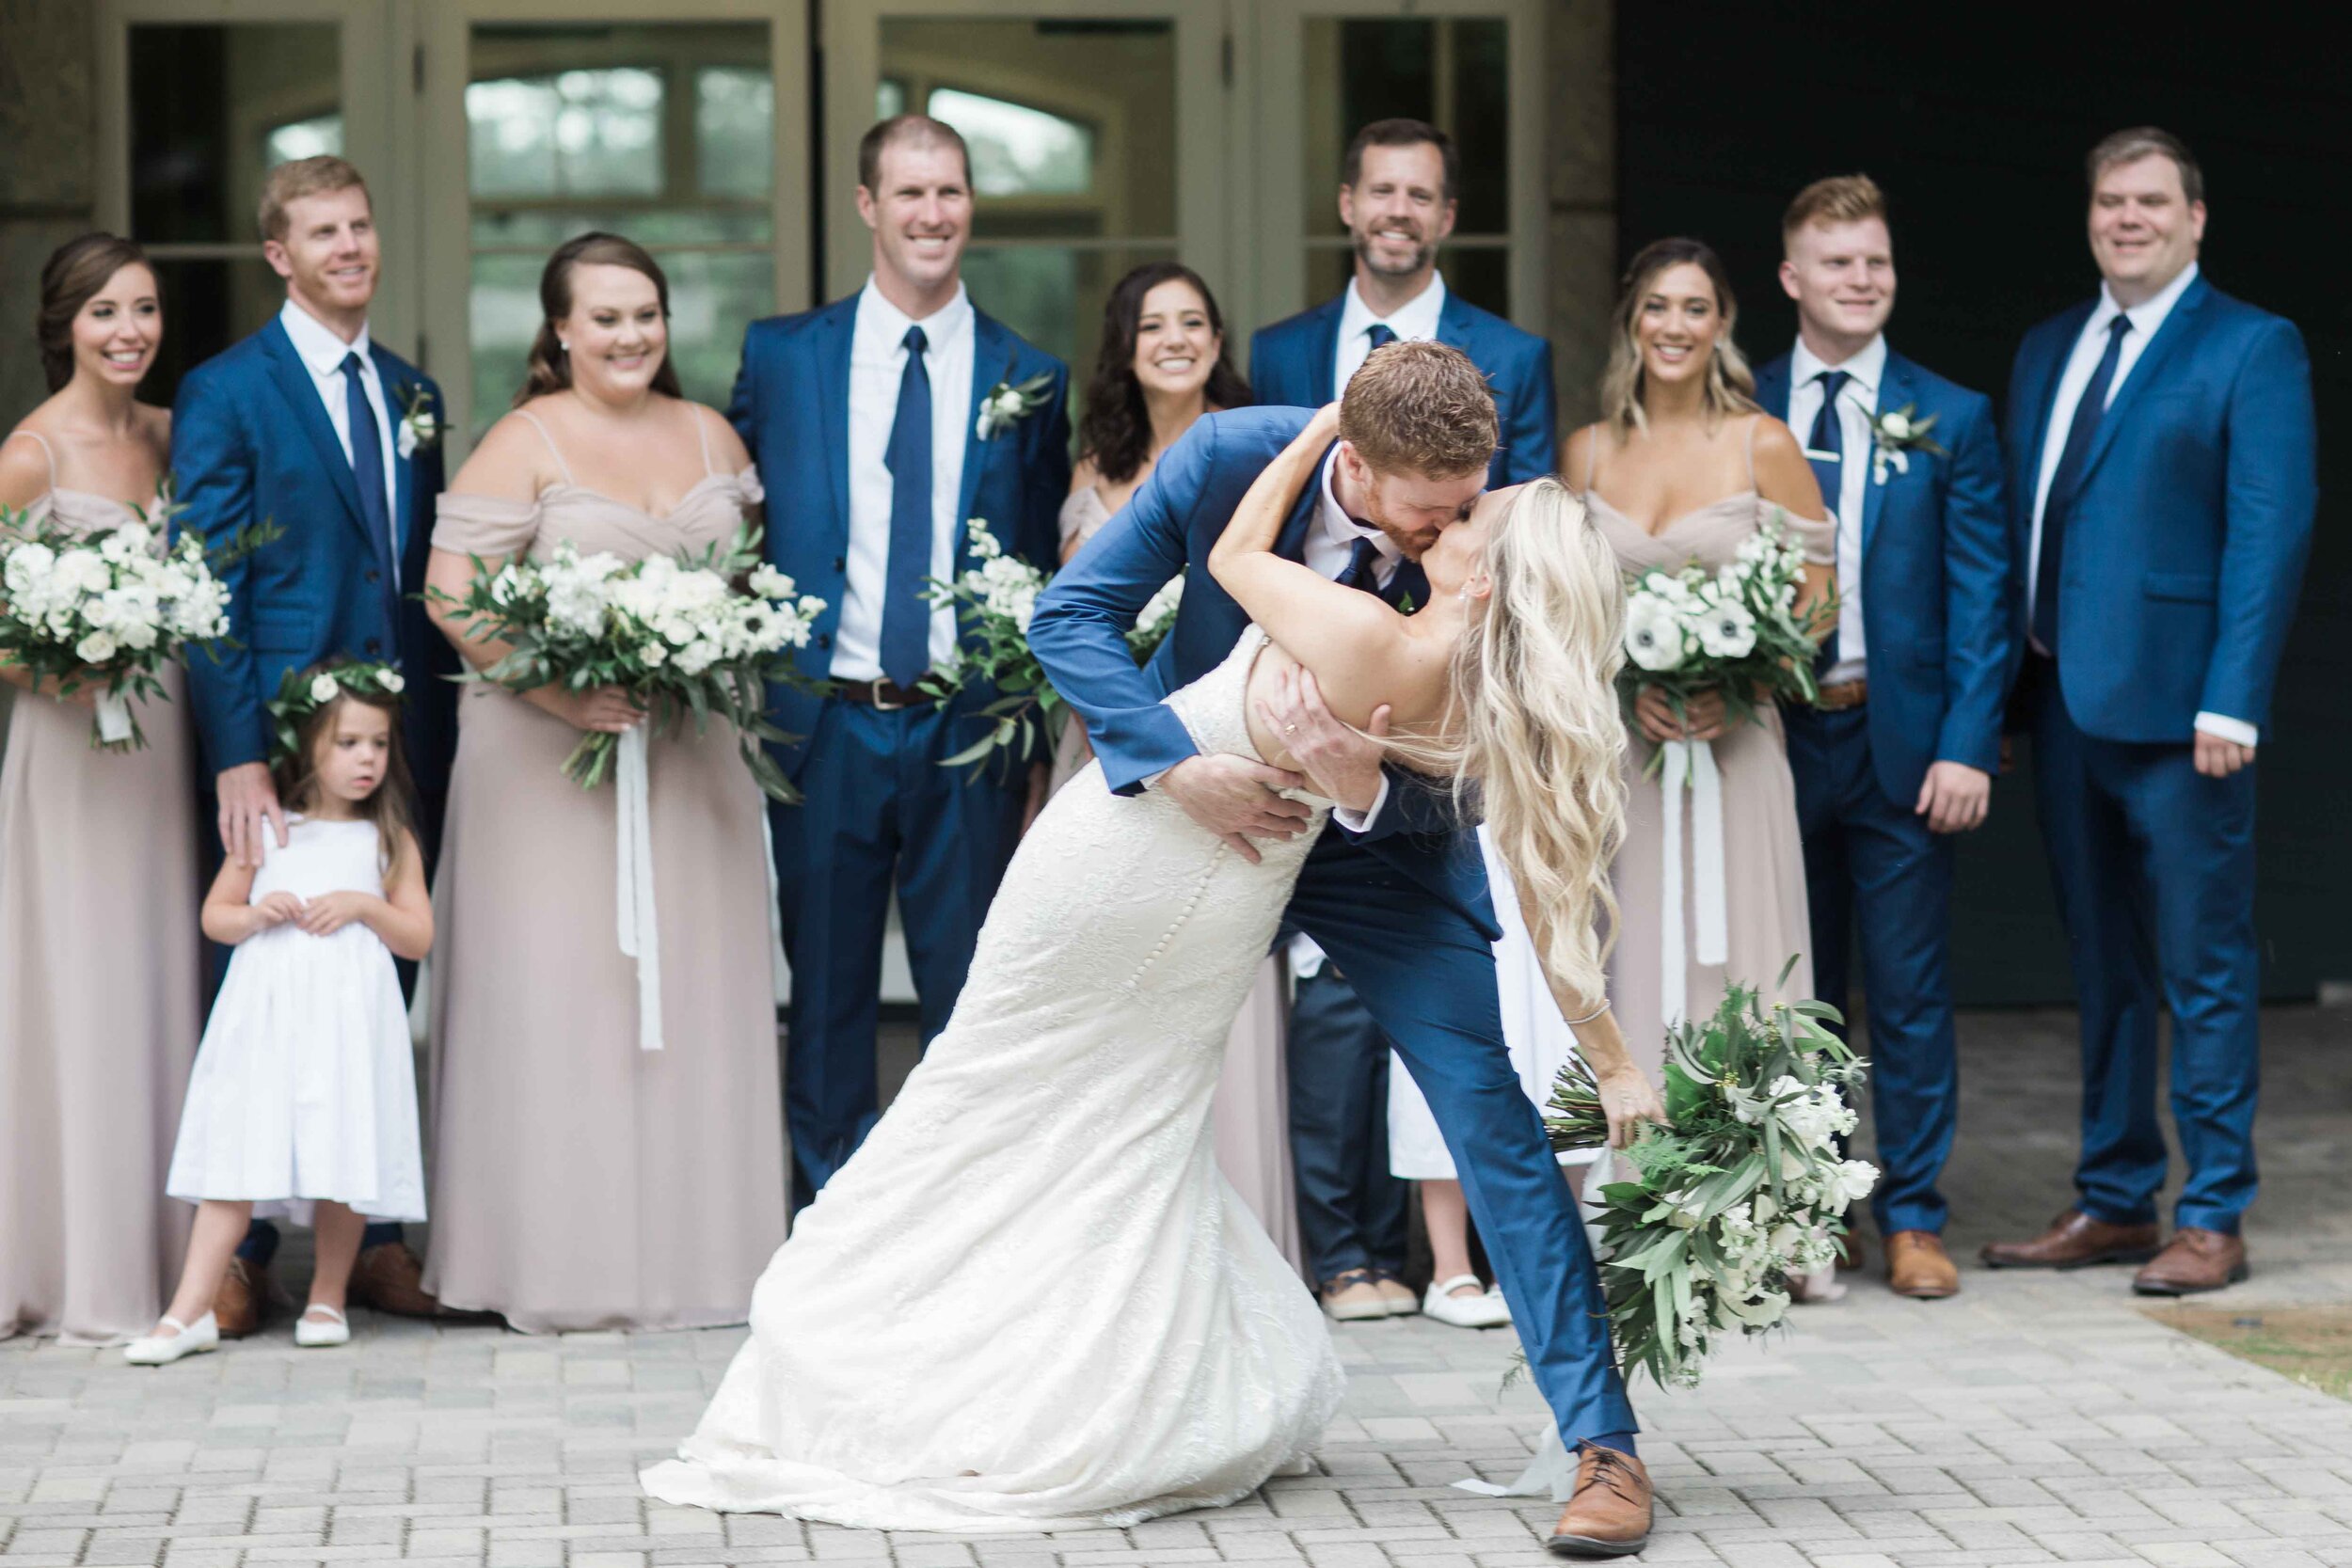 Blue suit groomsmen nude bridesmaids smiling bride and groom kiss 